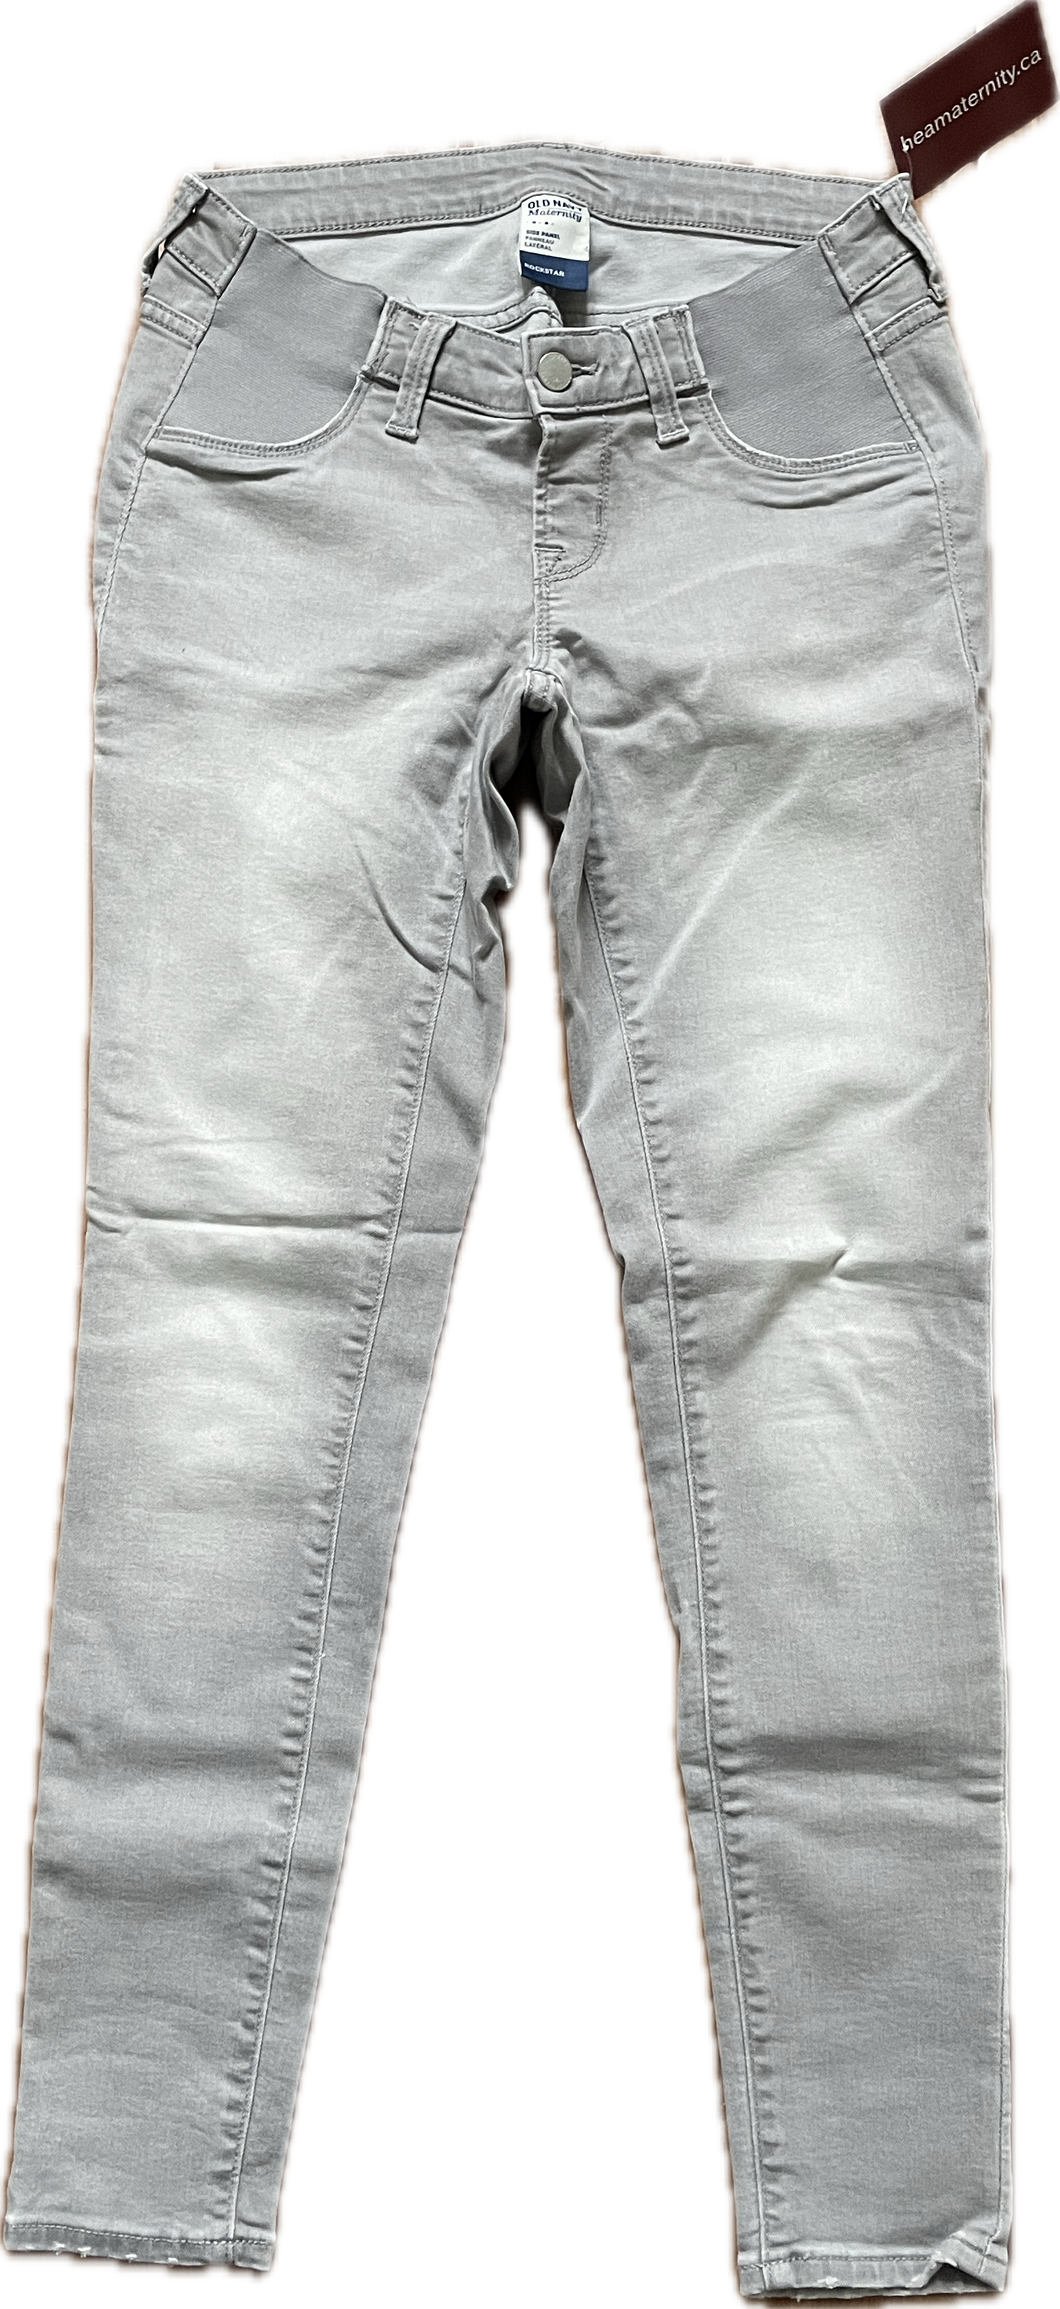 XS Old Navy Maternity Rockstar Skinny Jeans in Light Grey